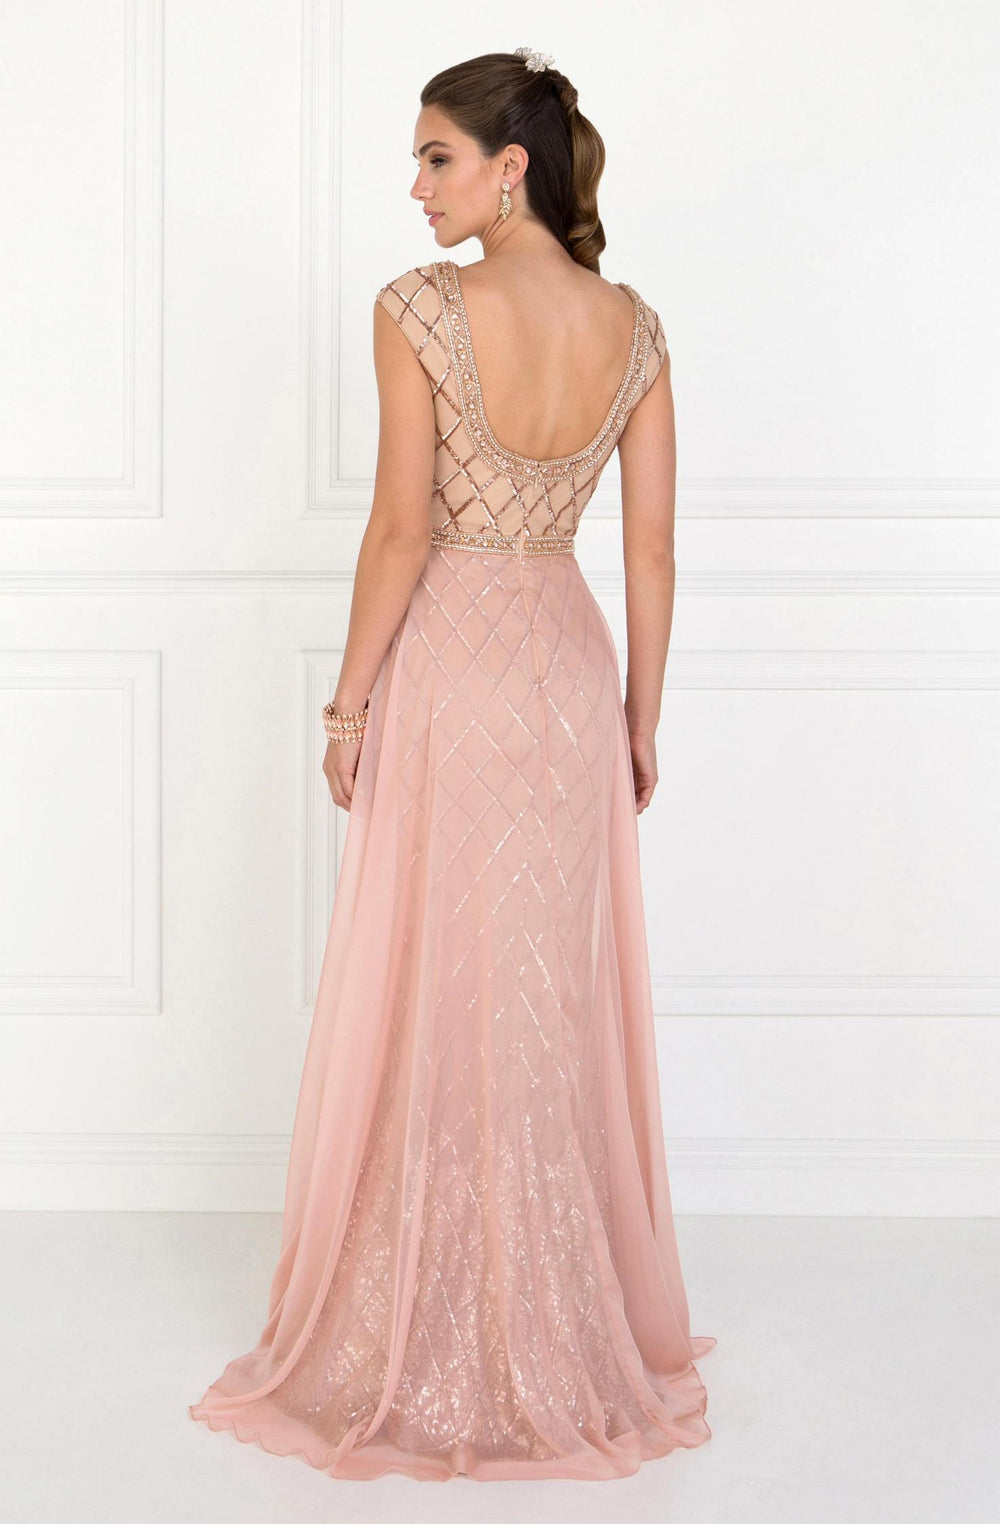 Embellished Long Pink Cap Sleeve Dress by Elizabeth K GL1577-Long Formal Dresses-ABC Fashion